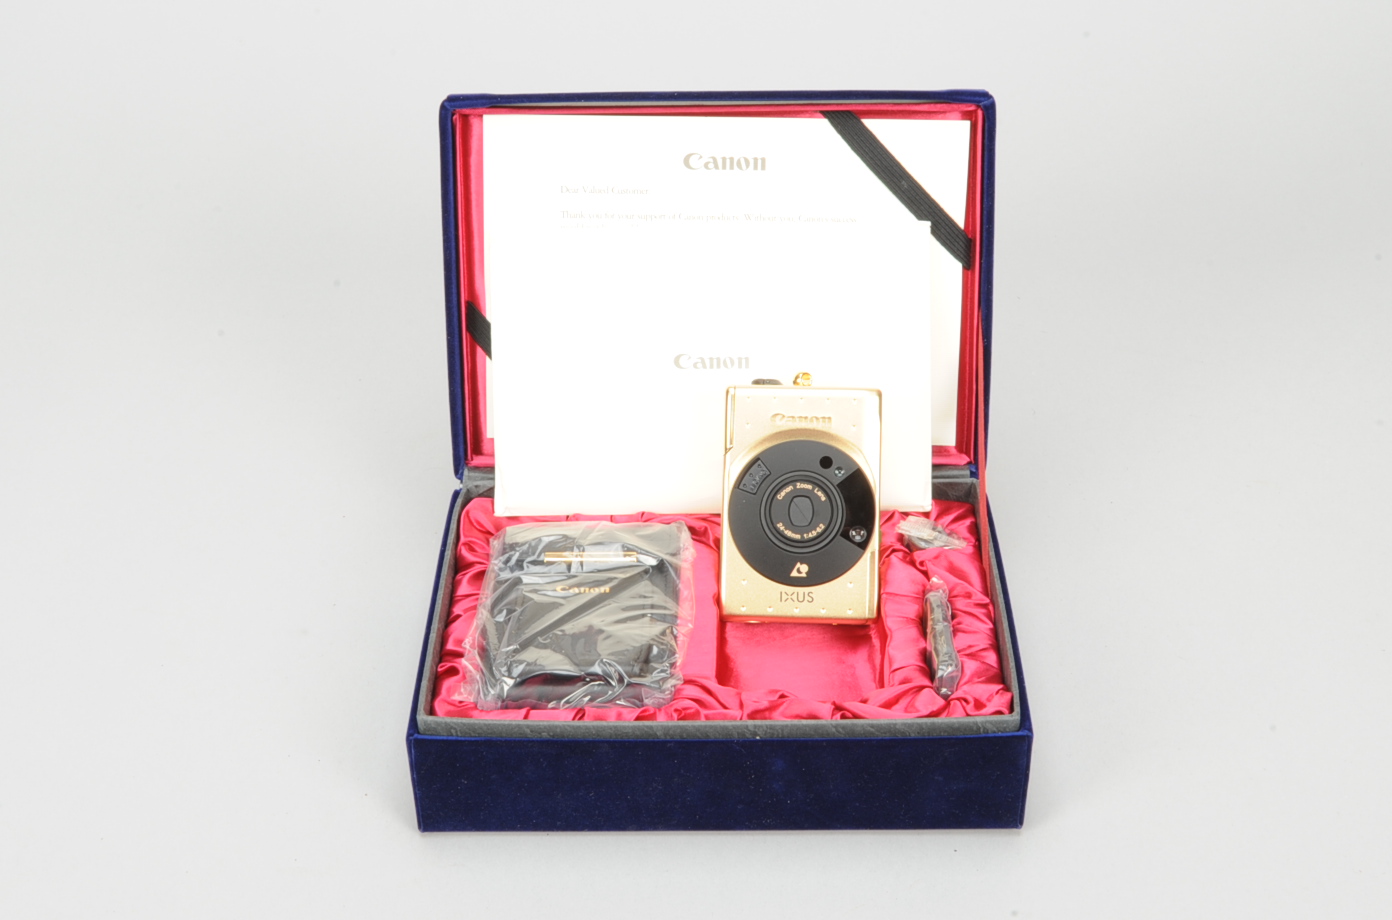 A 60 ?? Anniversary Canon Ixus Elph Advanced Camera, limited edition serial no 009173, gold